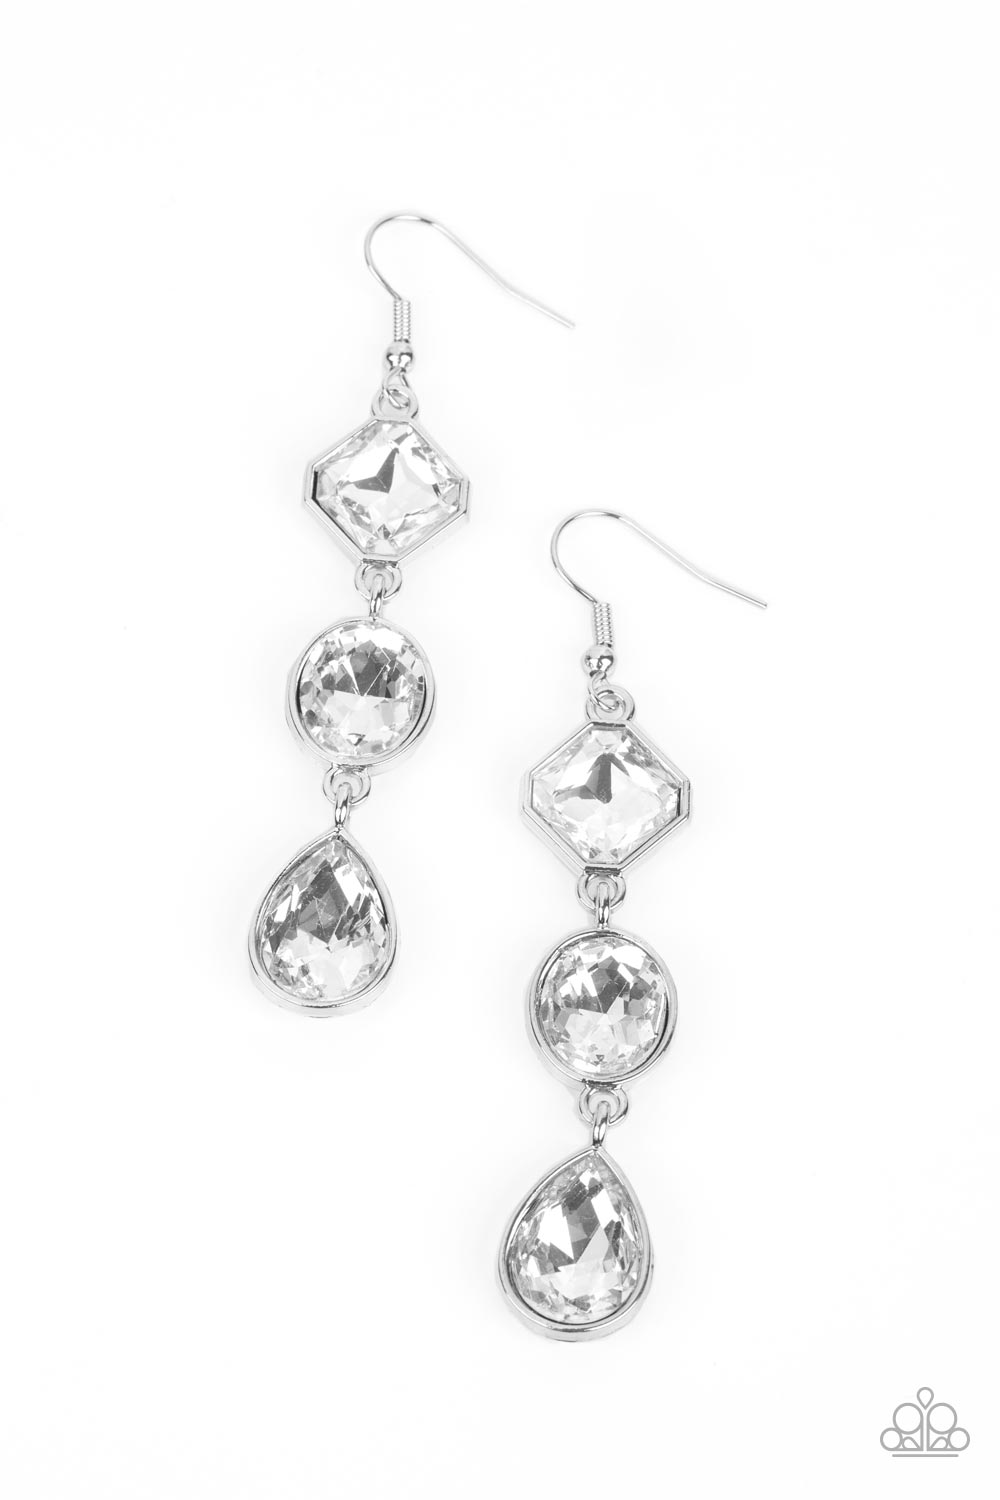 Reflective Rhinestone Earrings-White and Silver